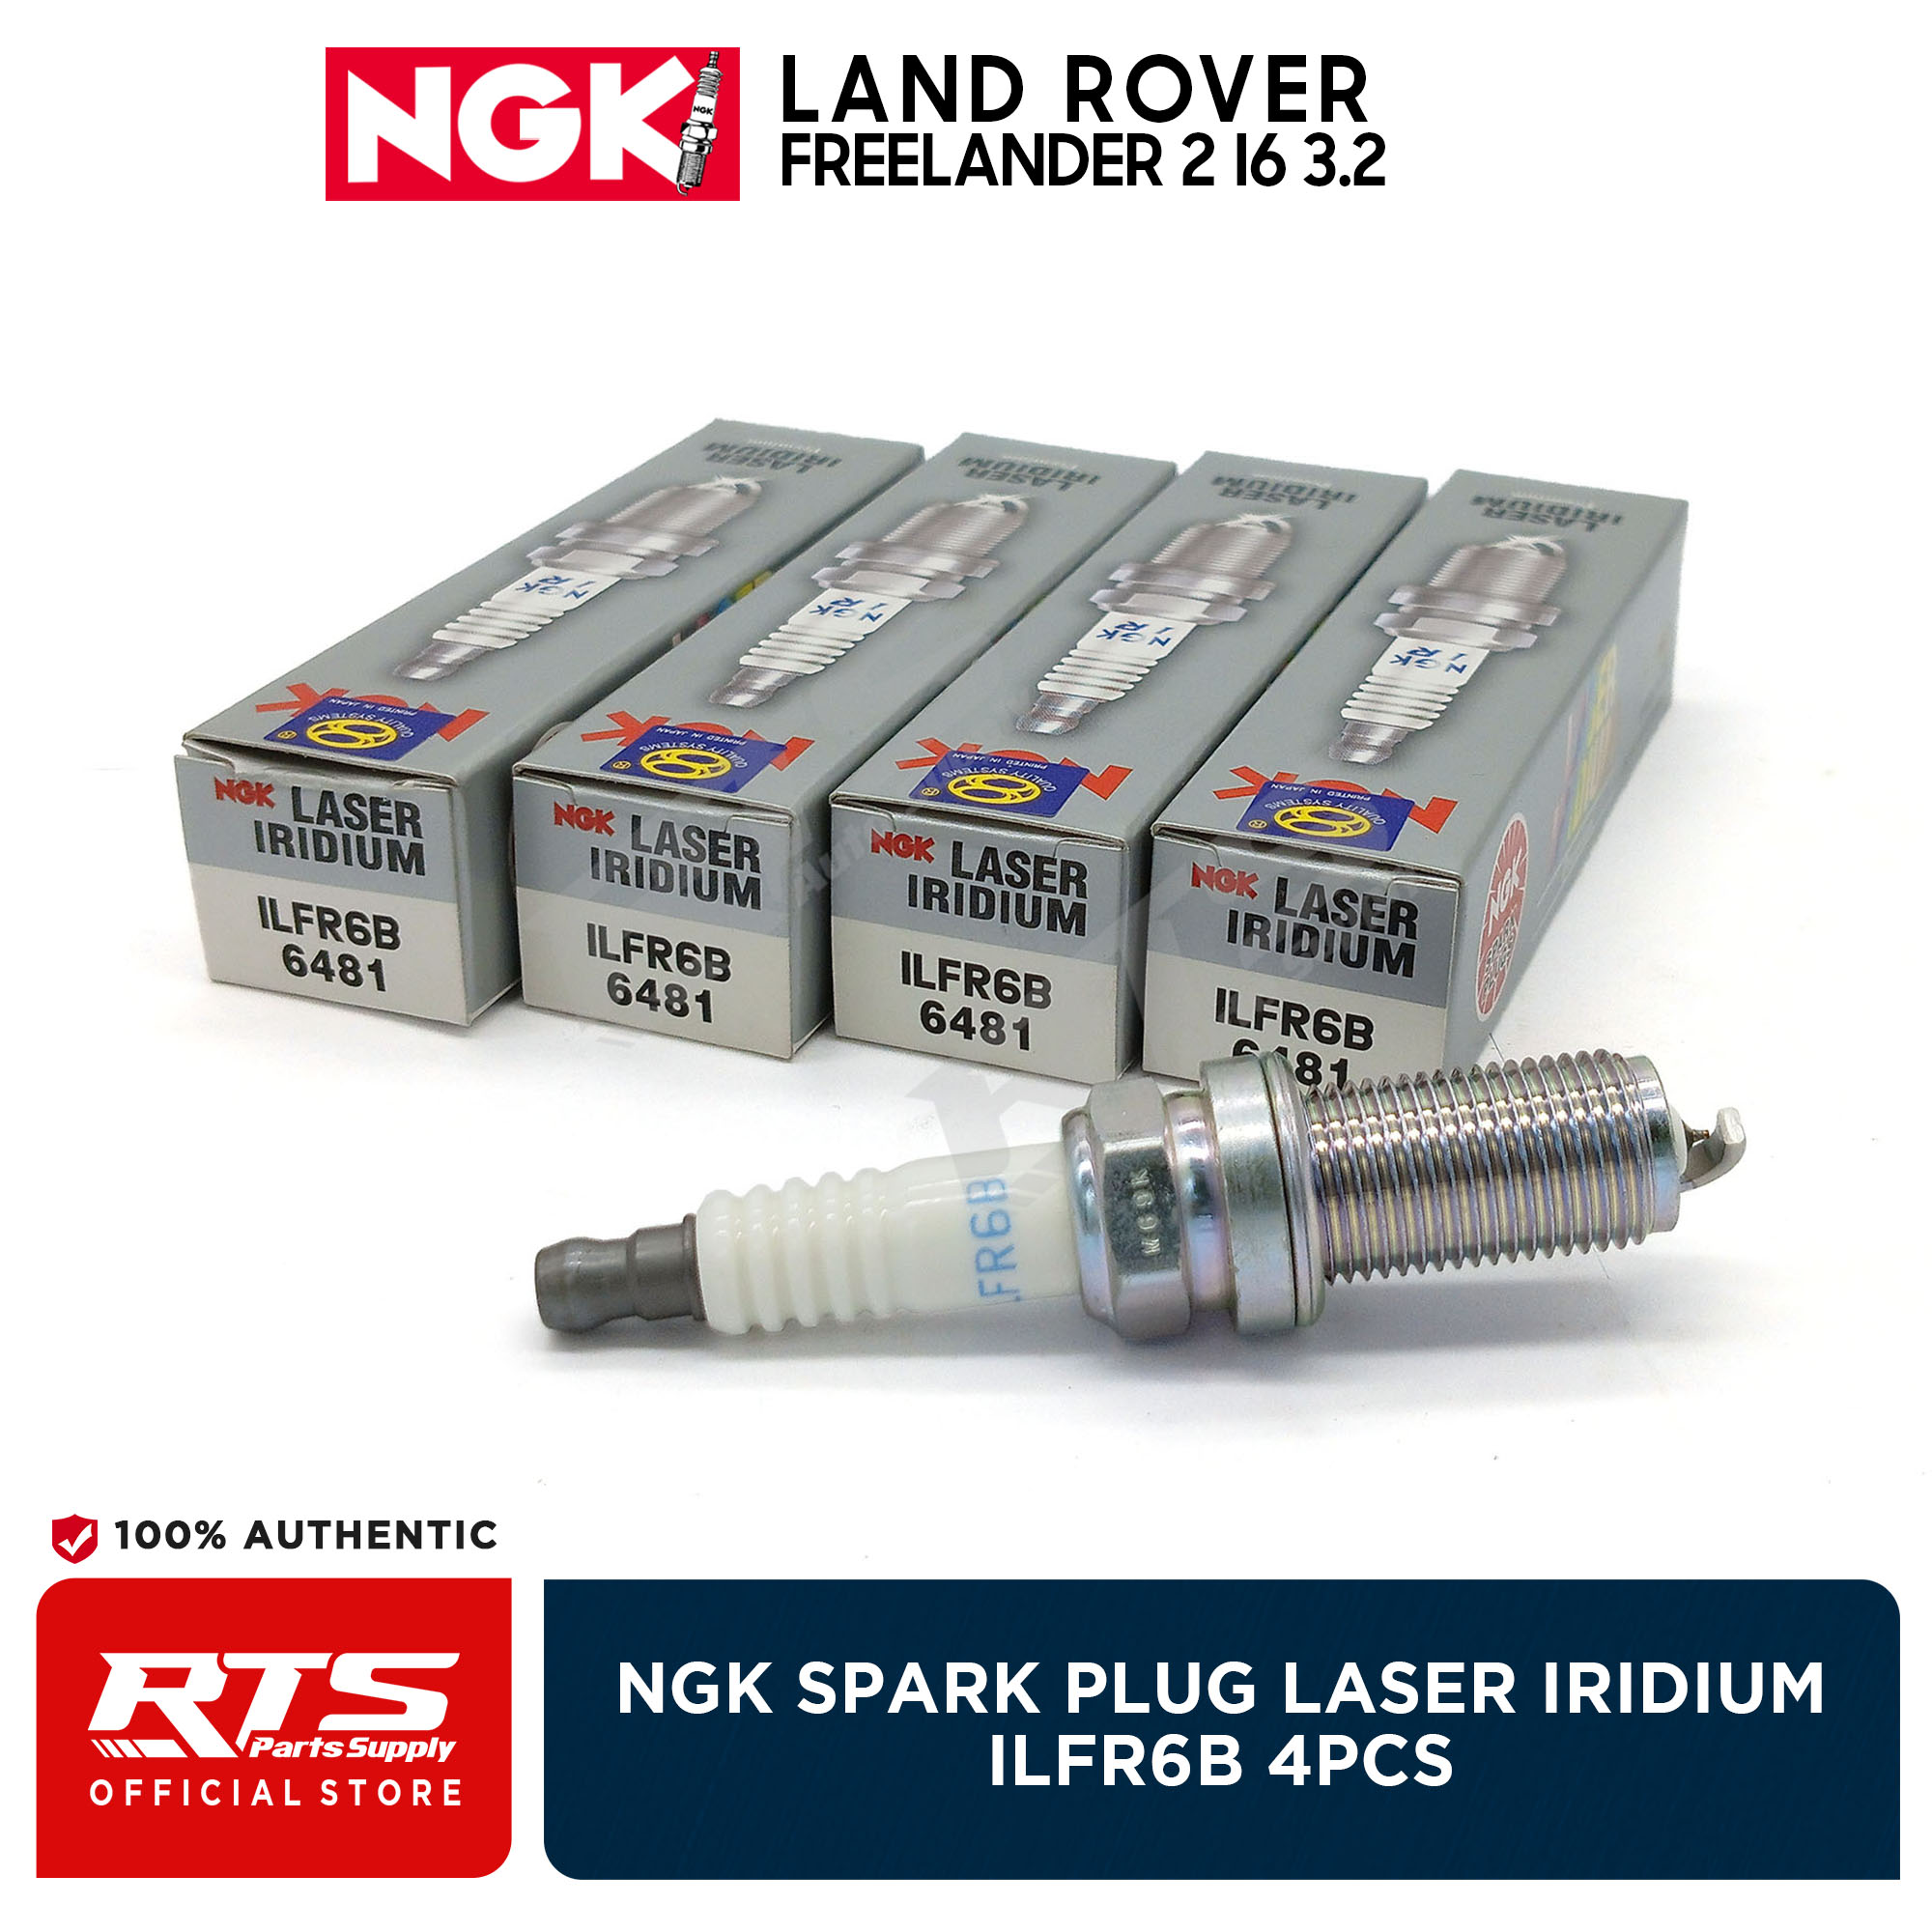 NGK Spark Plug Laser Iridium ILFR6B for Land Rover Freelander 2 i6